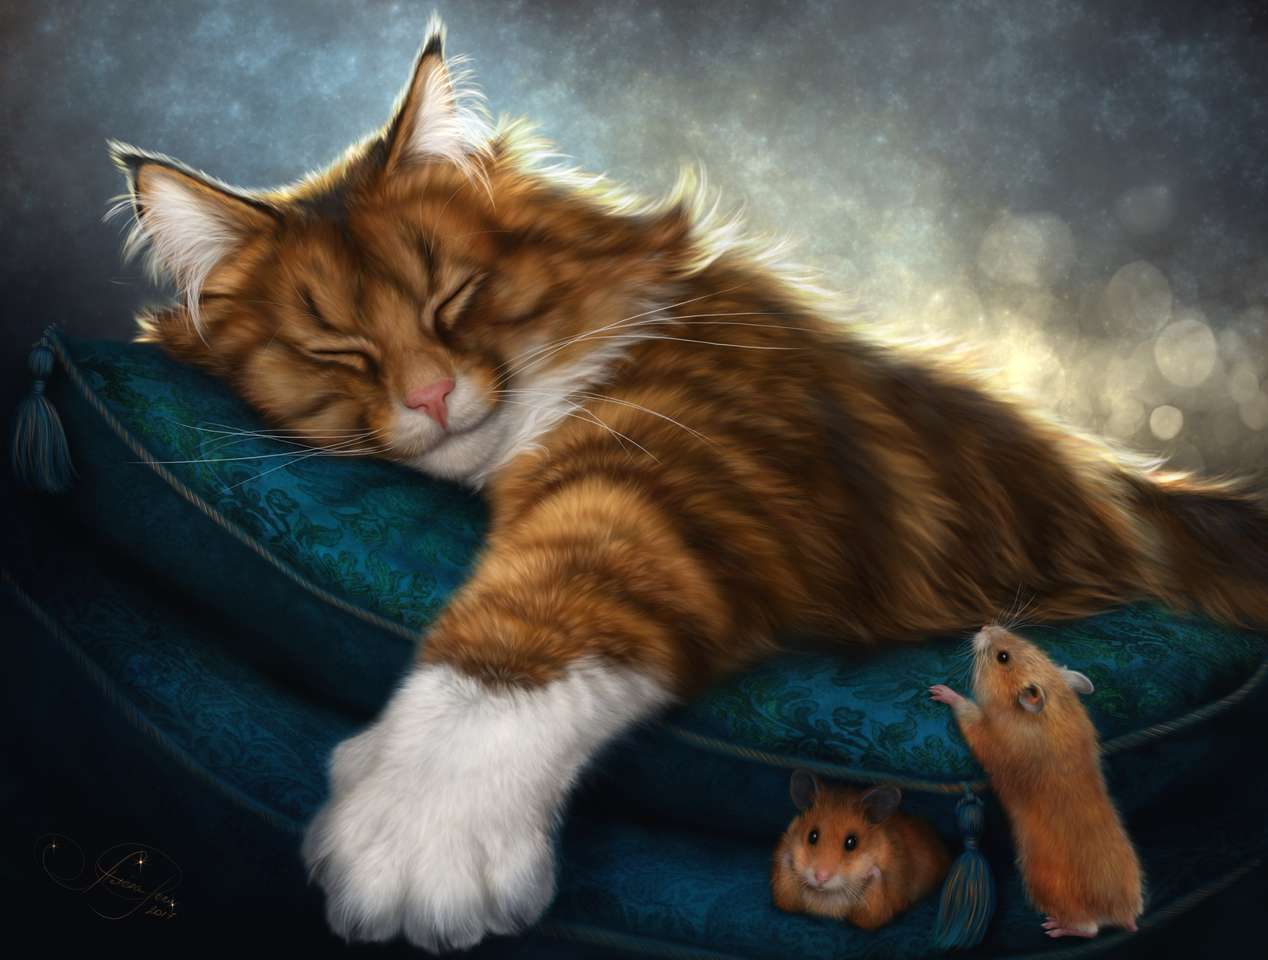 cand doarme pisica ies soarecii puzzle online